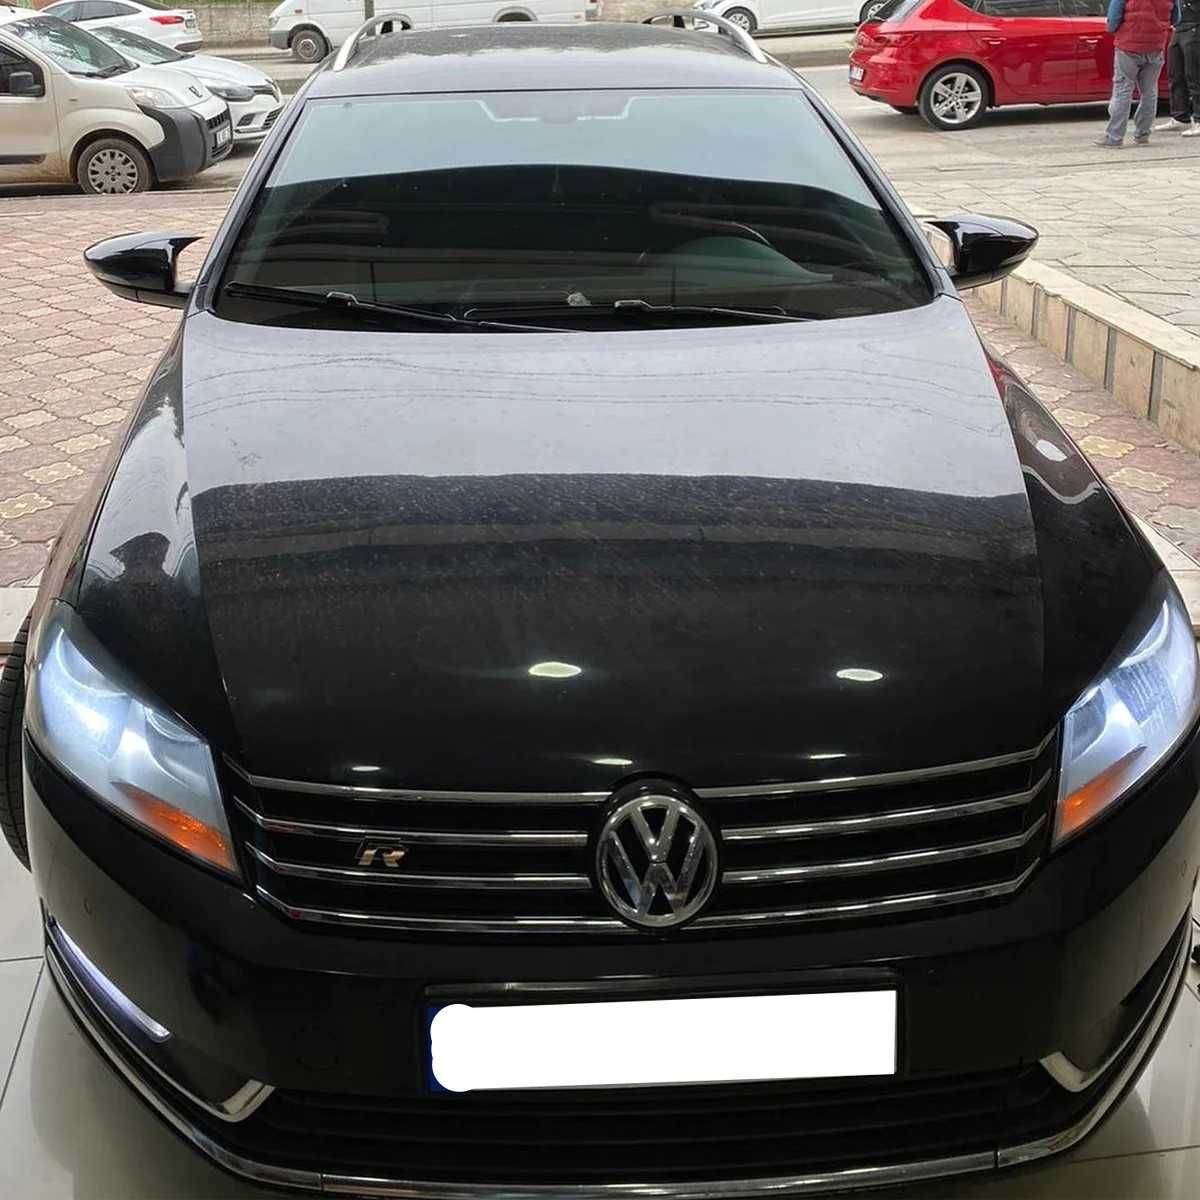 Capace Oglinzi M Style Batman Volkswagen VW Passat B7, Negru Lucios